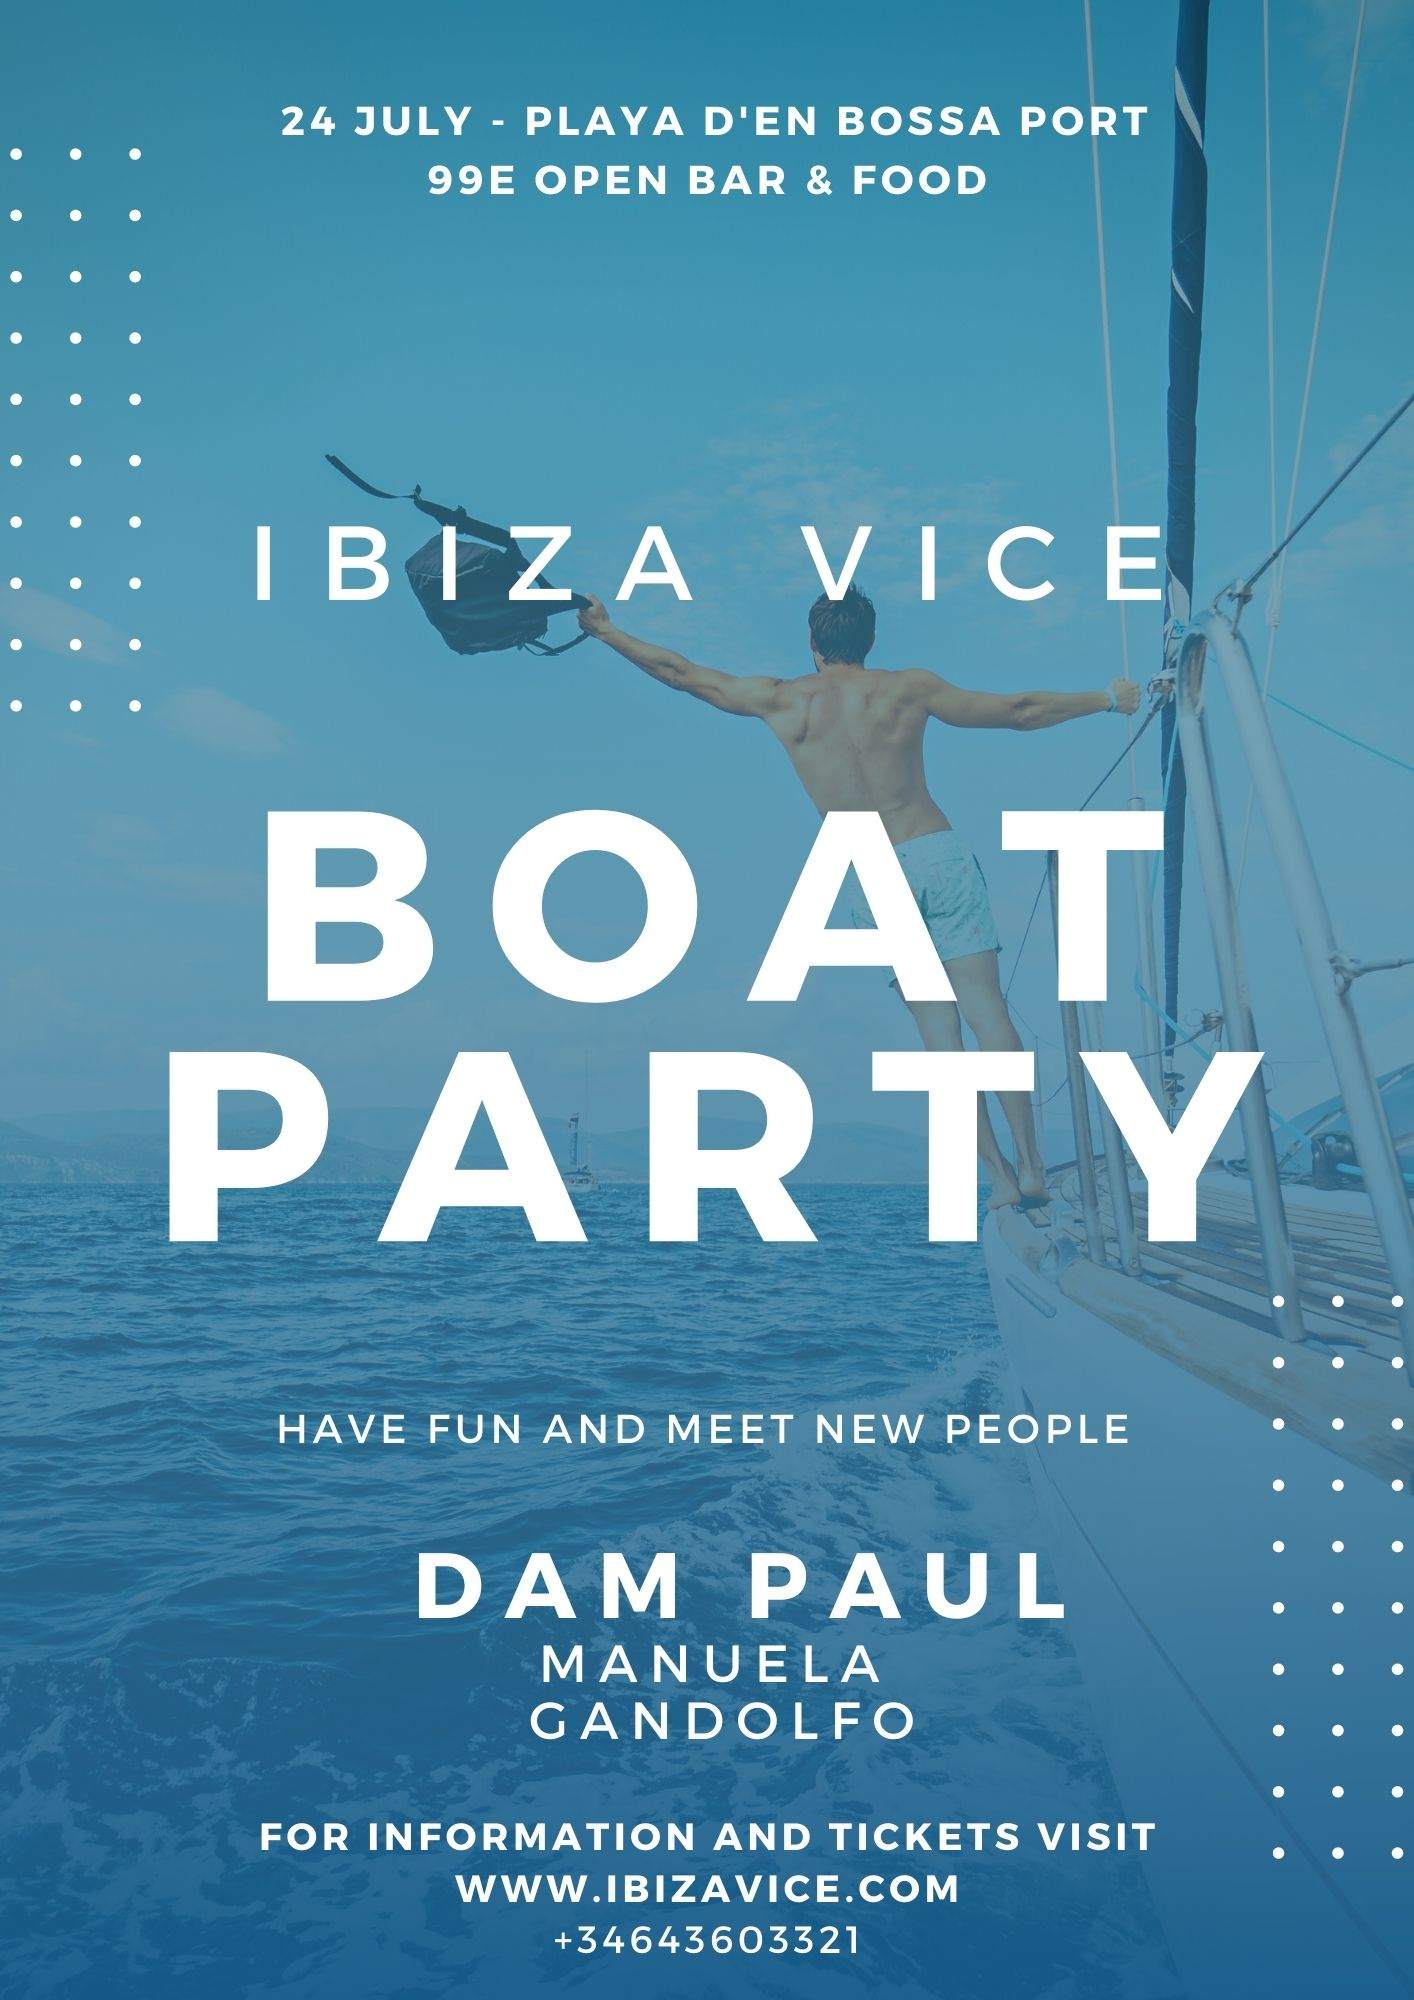 Boat Party Ibiza Vice - フライヤー表